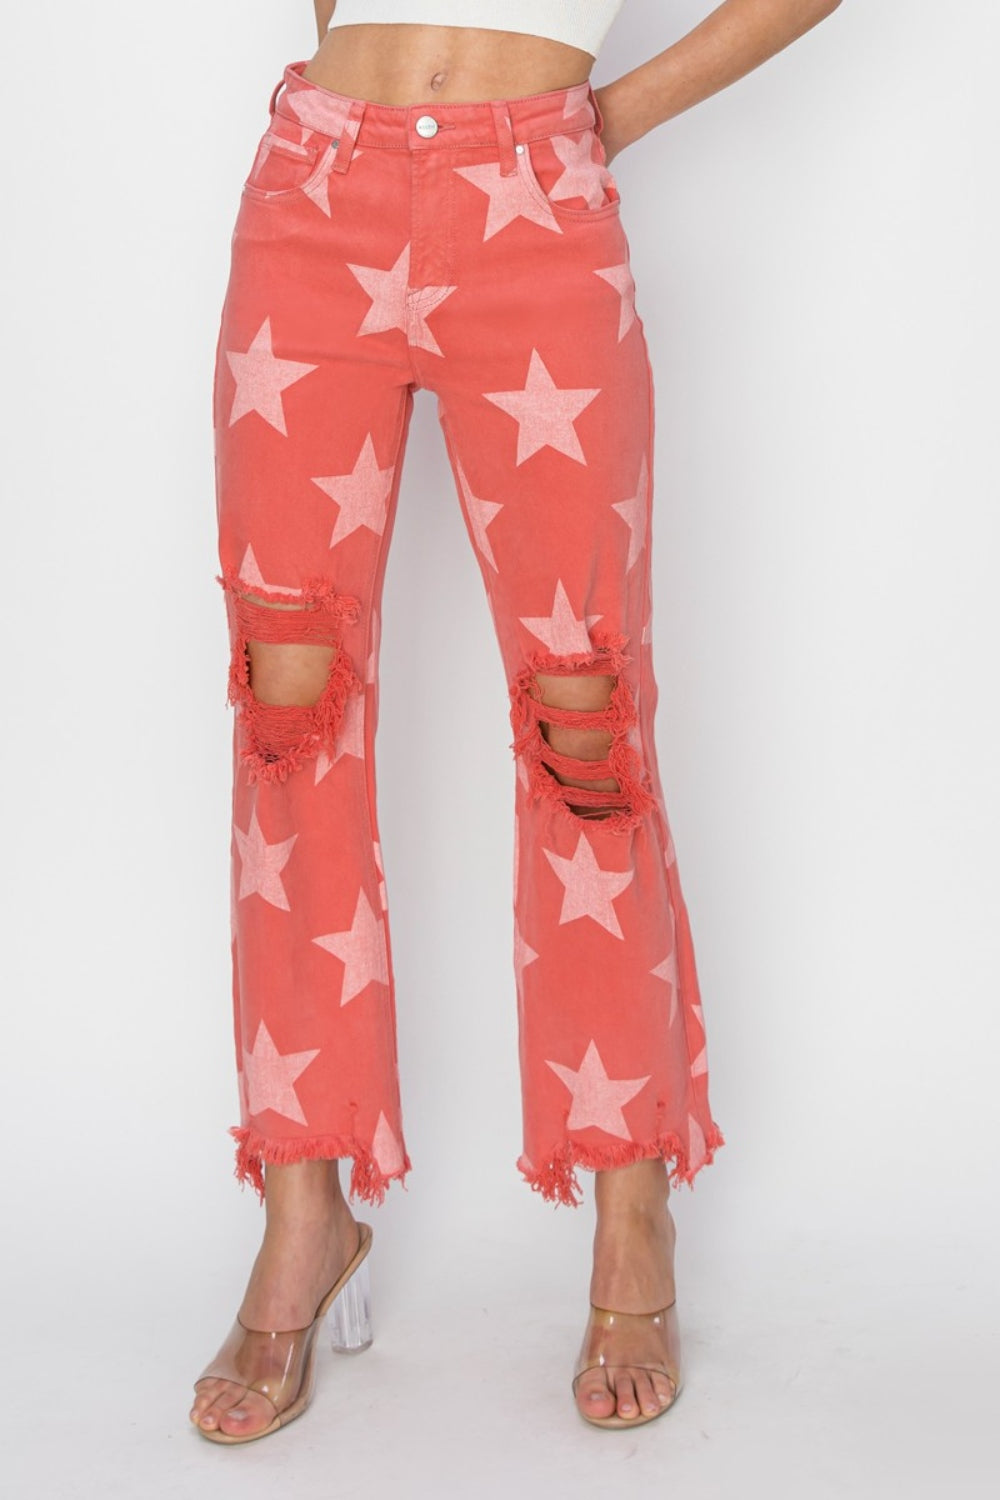 RISEN Plus Size Distressed Raw Hem Star Pattern Jeans Sunset and Swim Peach Blossom 0 